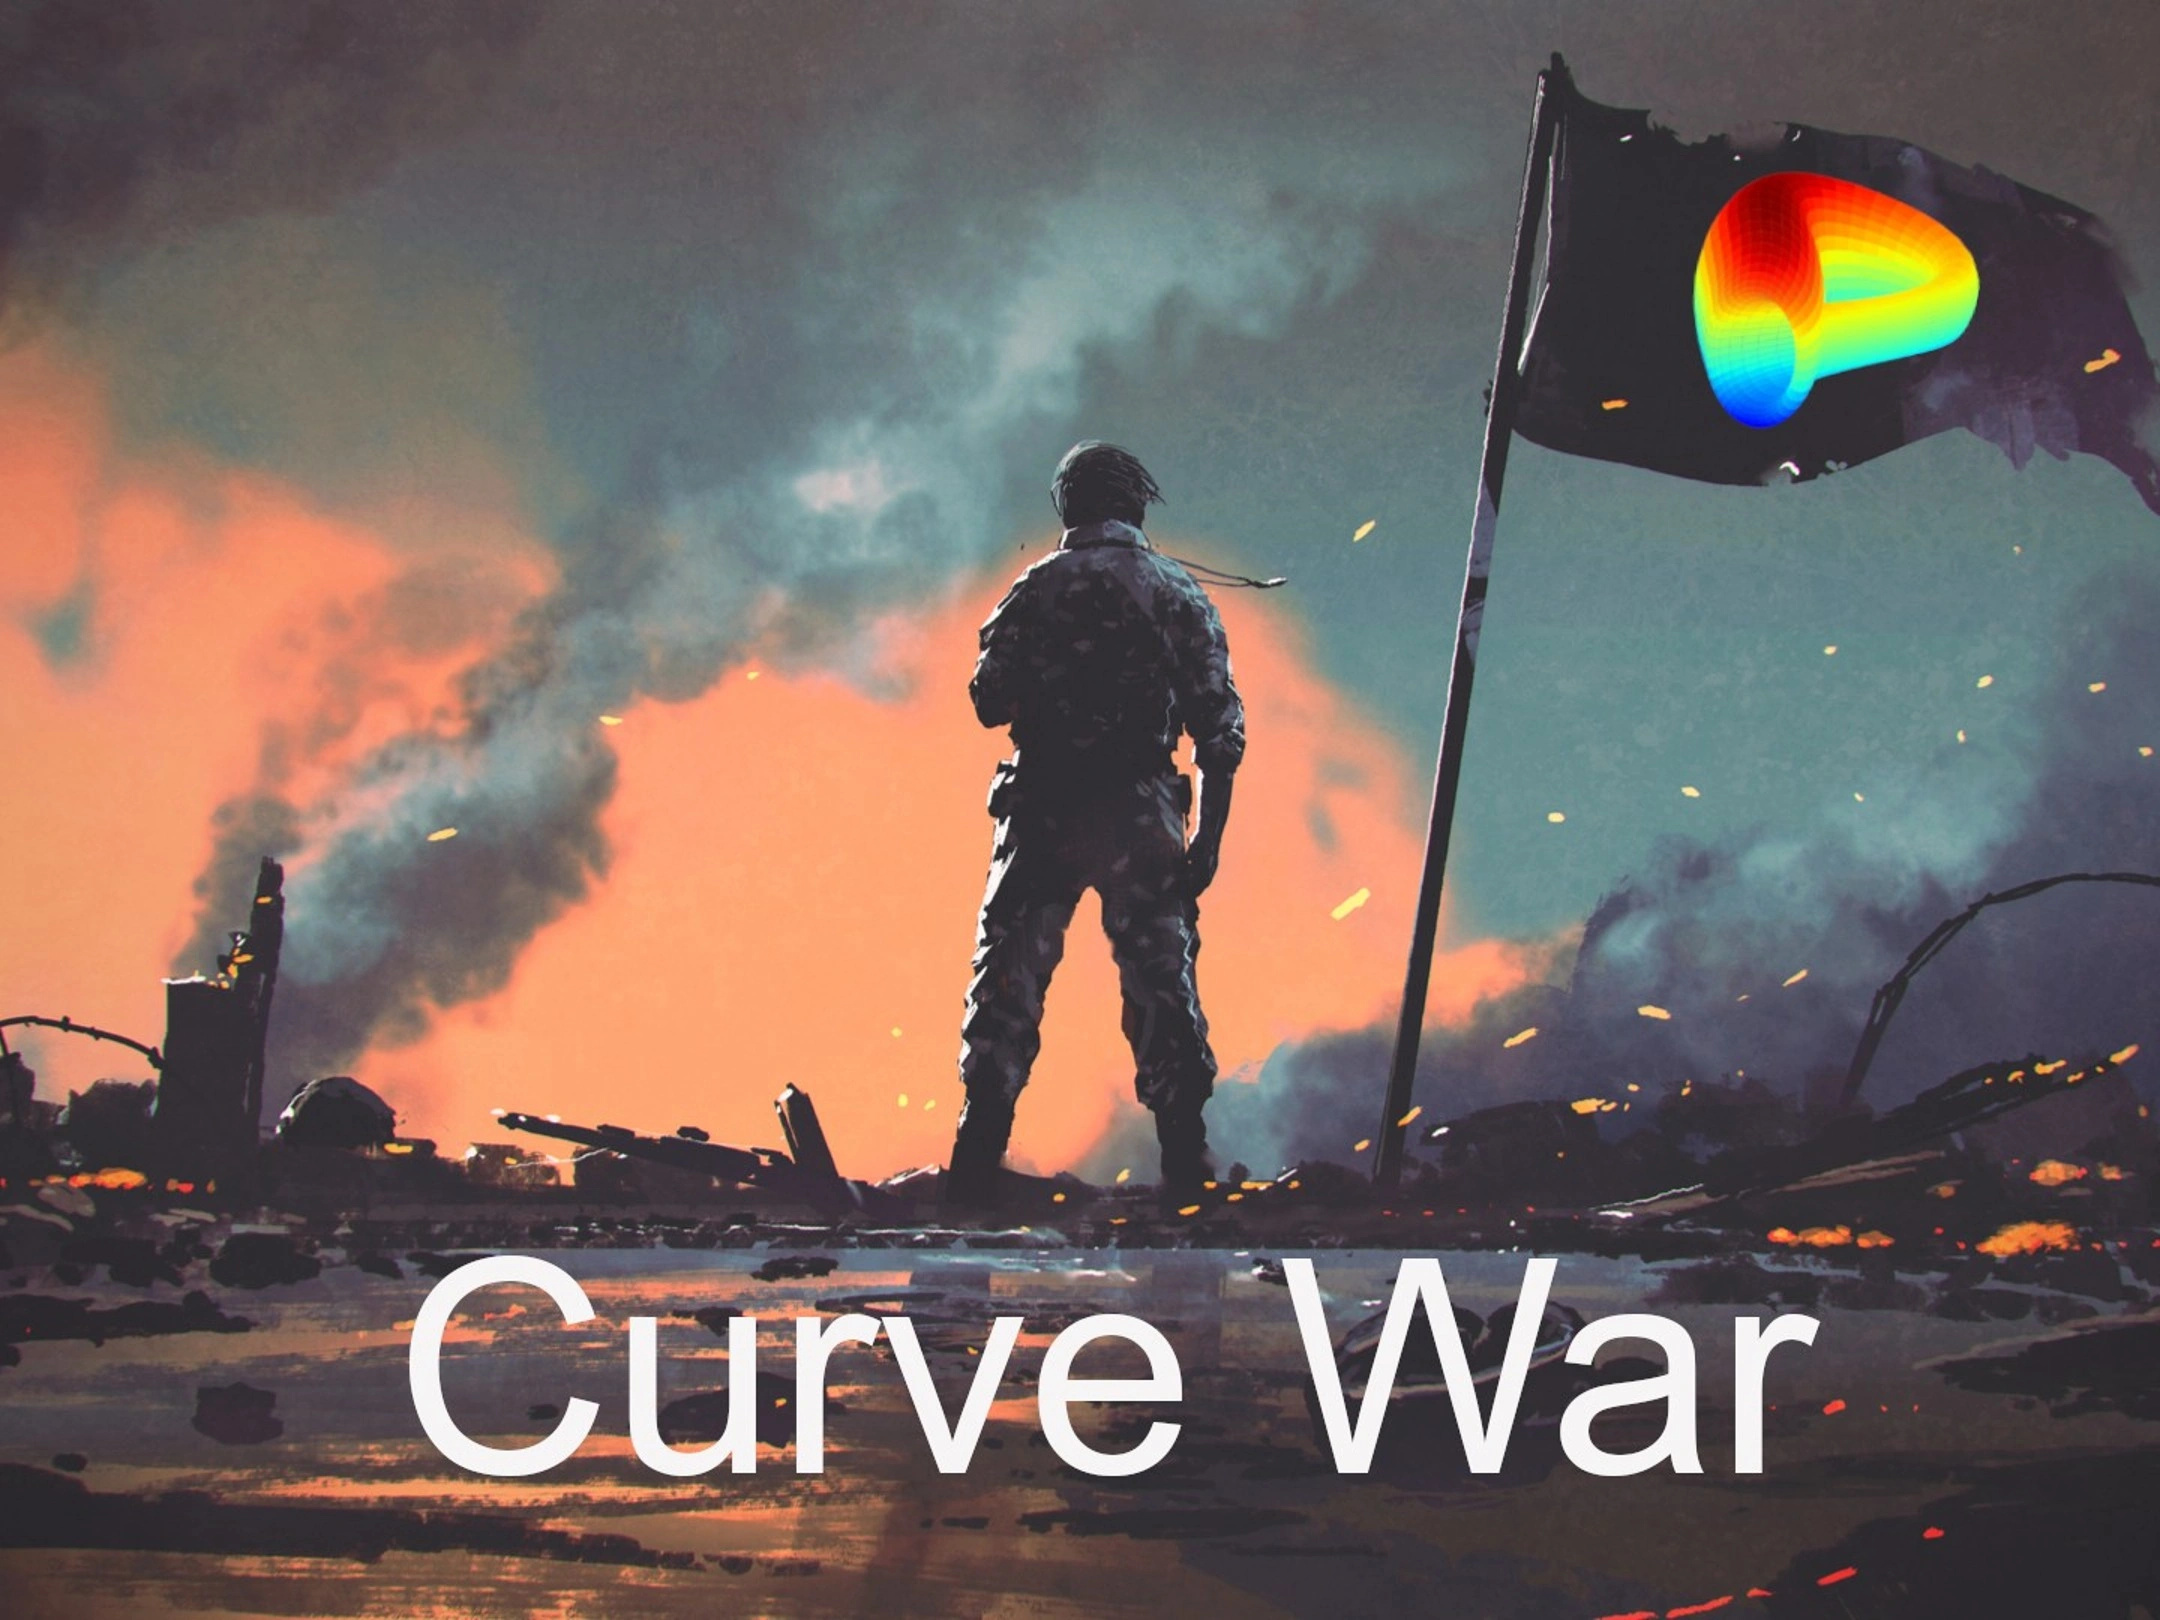 Curve Wars